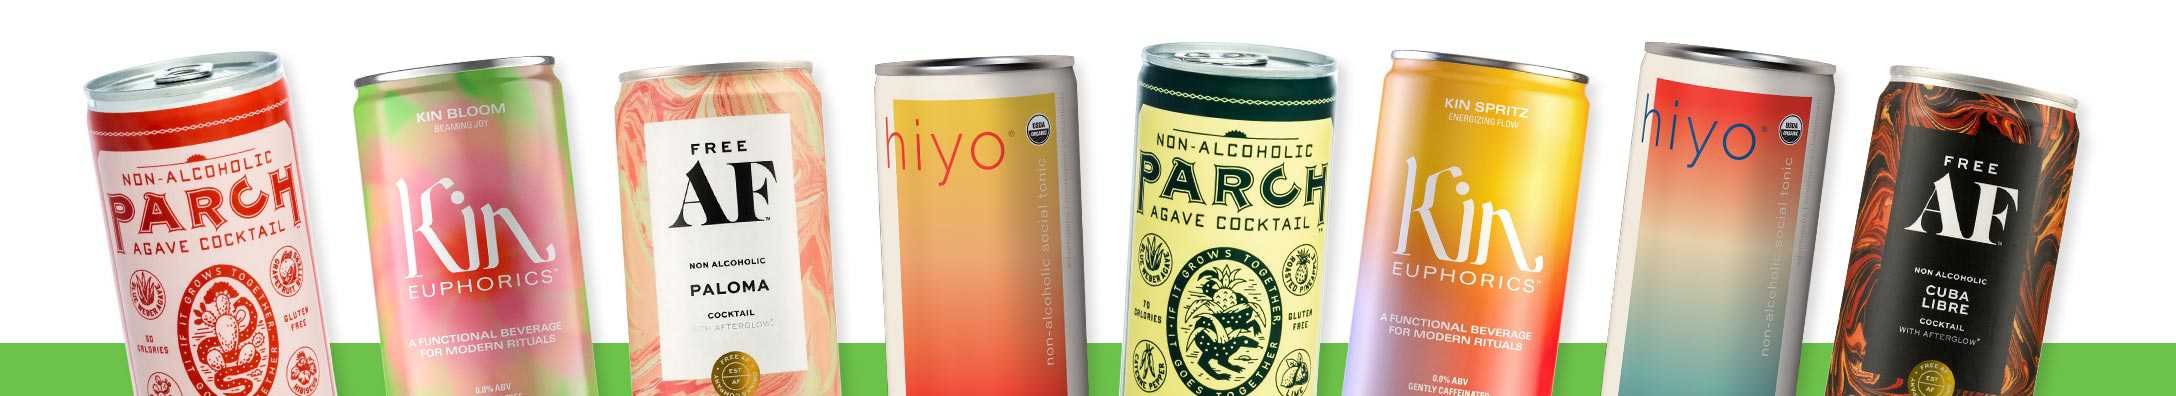 non-alcoholic beverage varieties